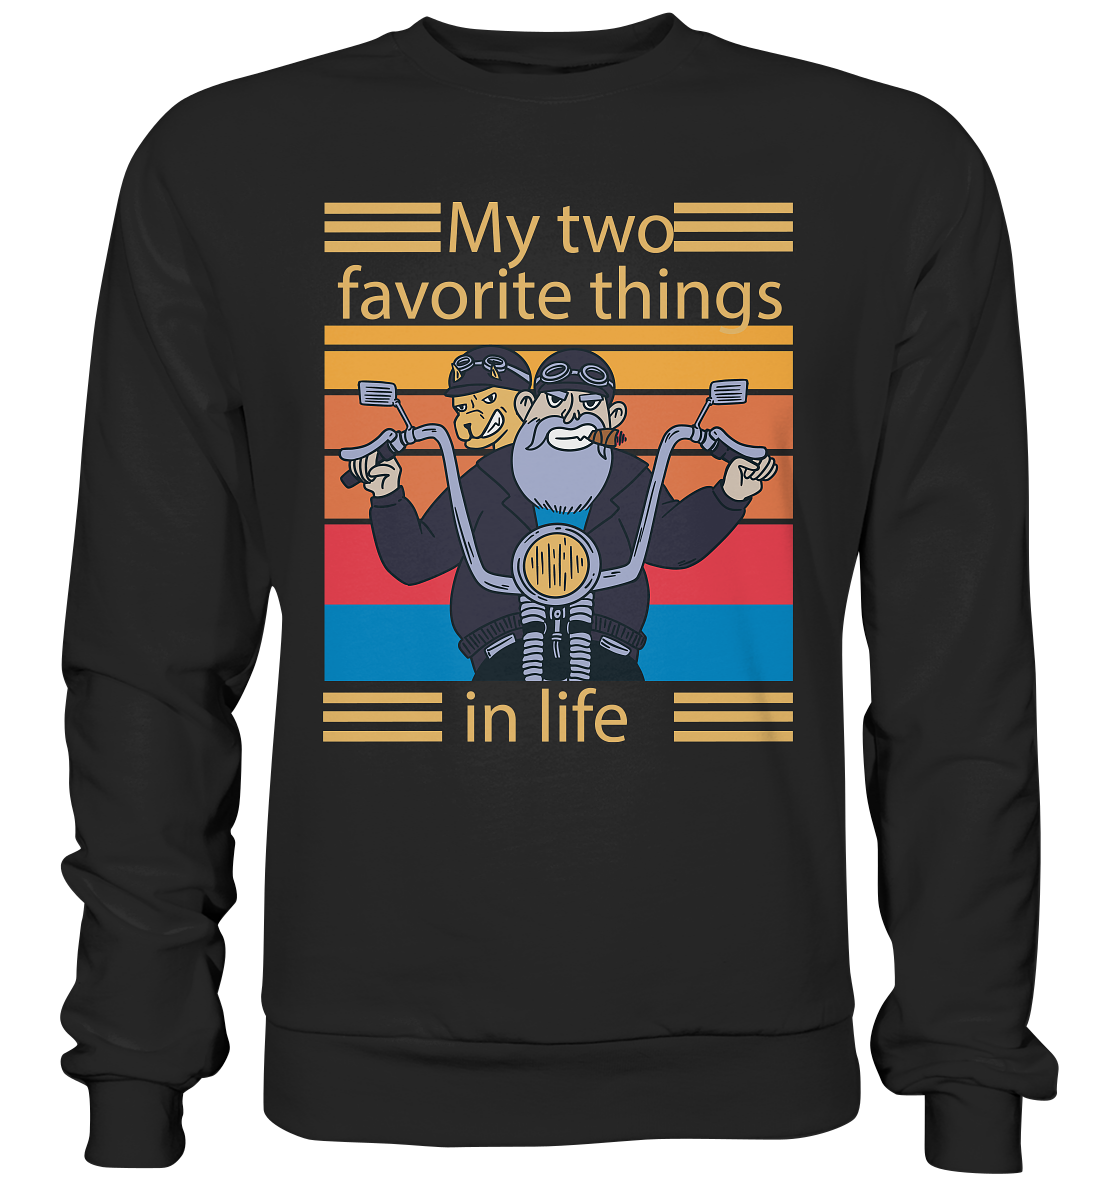 My two favorite things in life - Premium Sweatshirt - Online Kaufhaus München